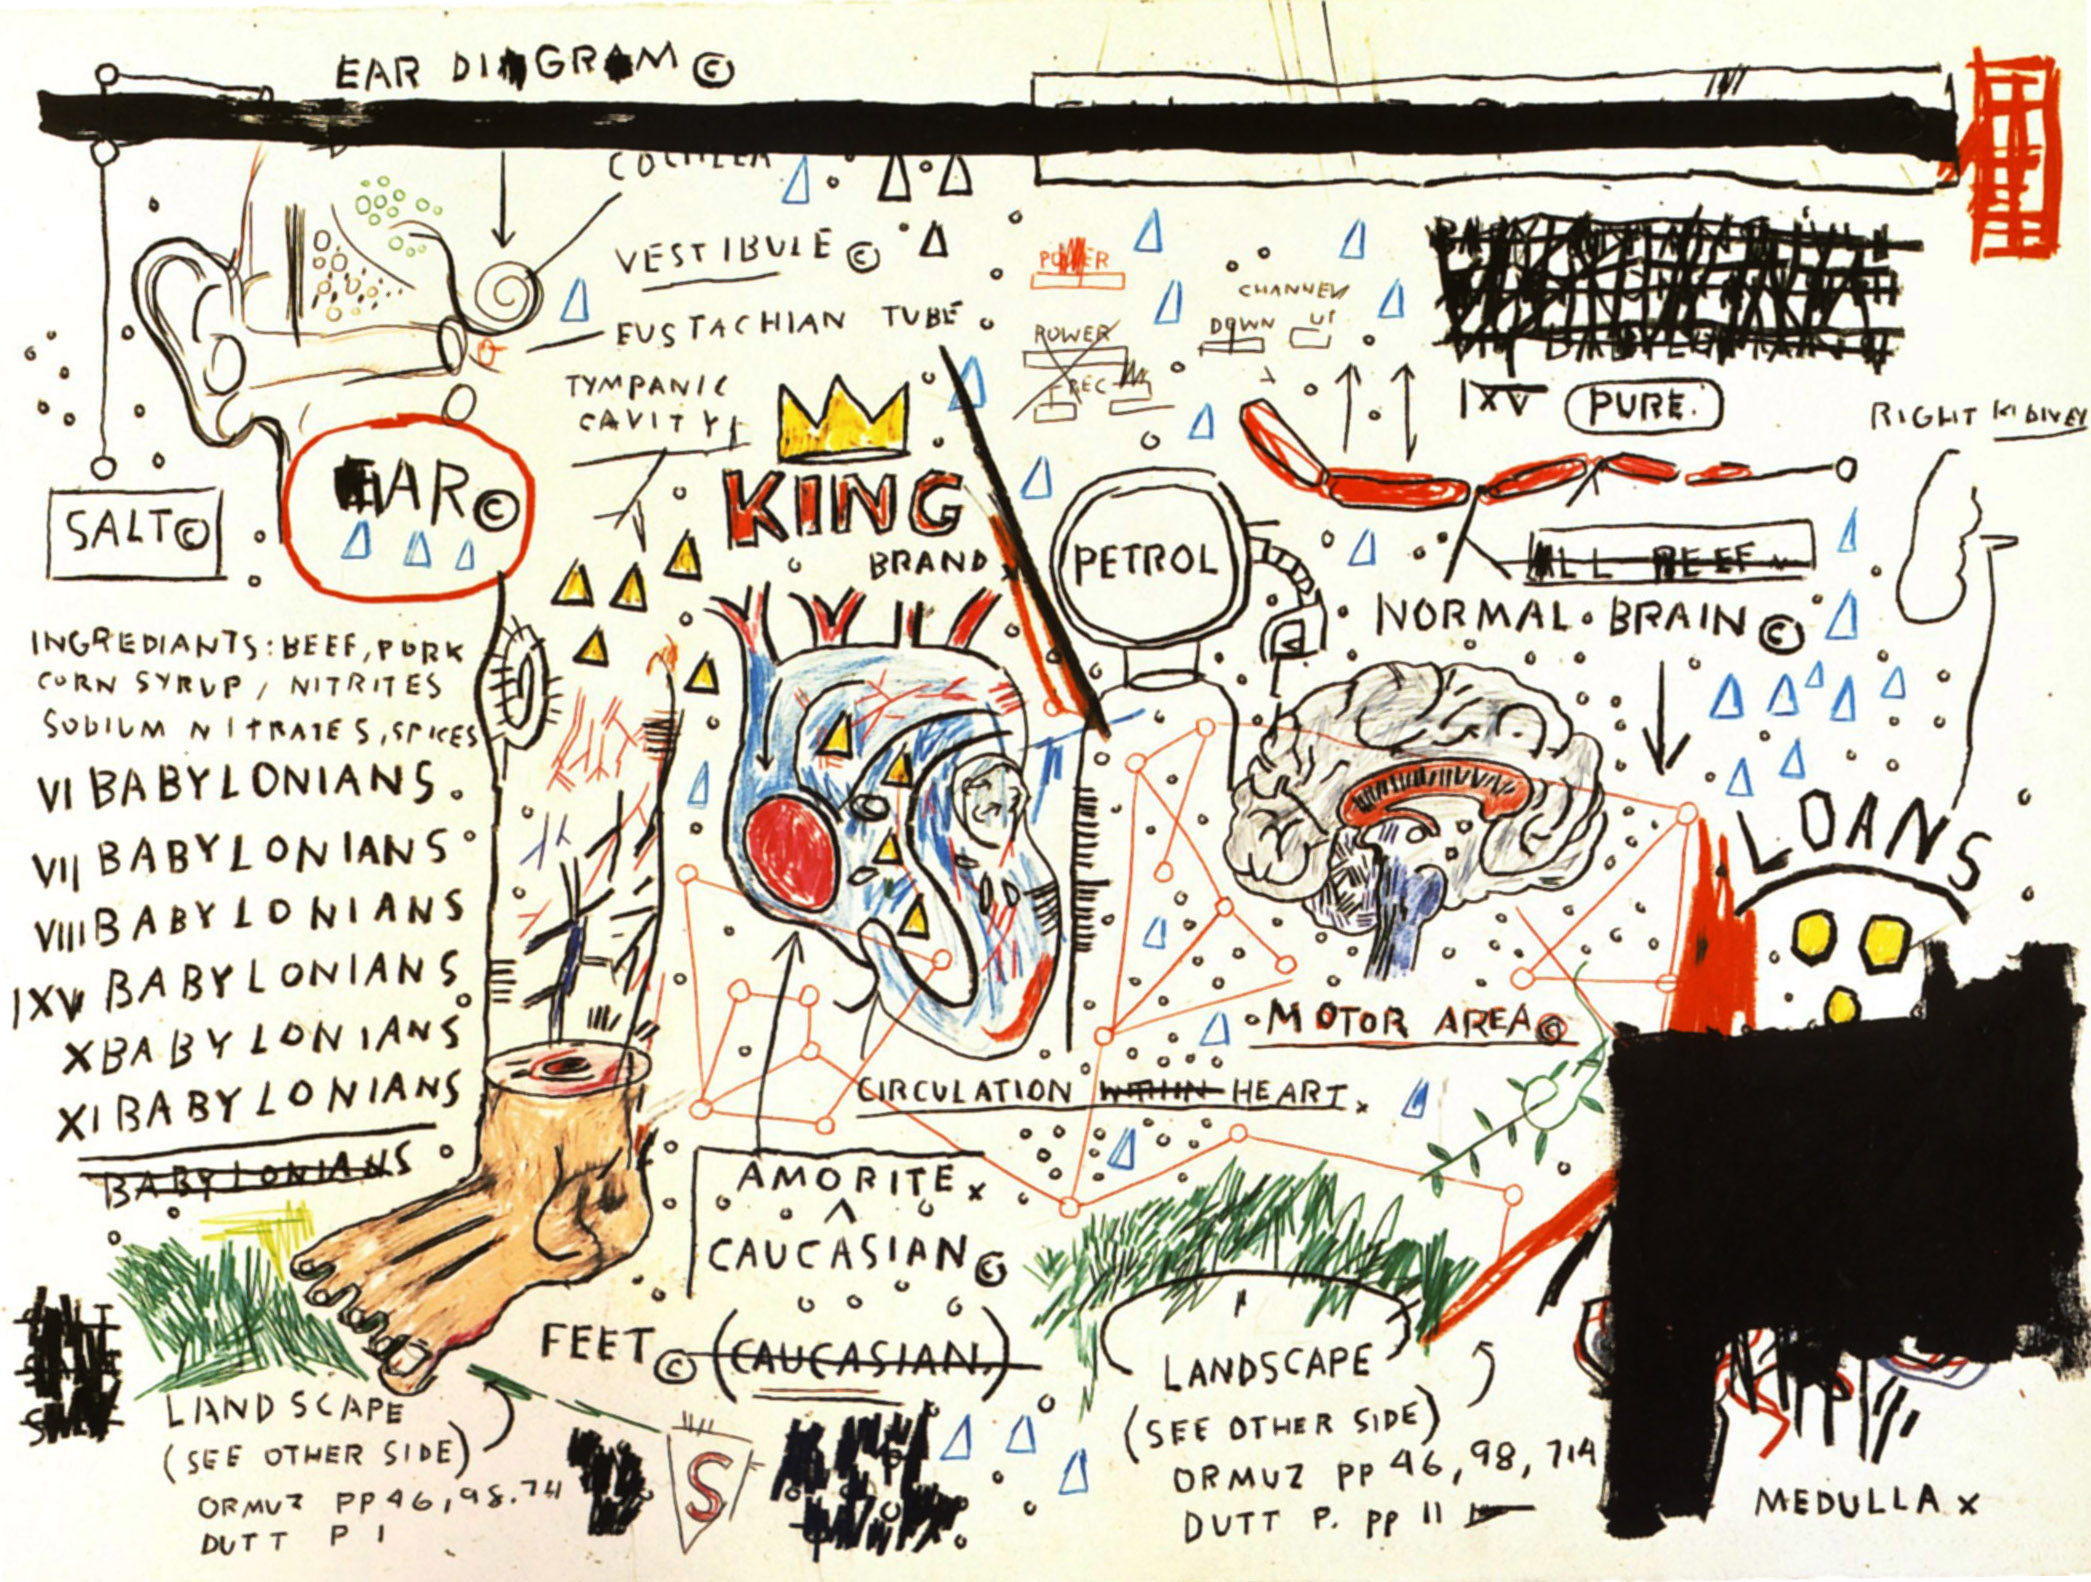 Jean-Michel Basquiat, King Brand